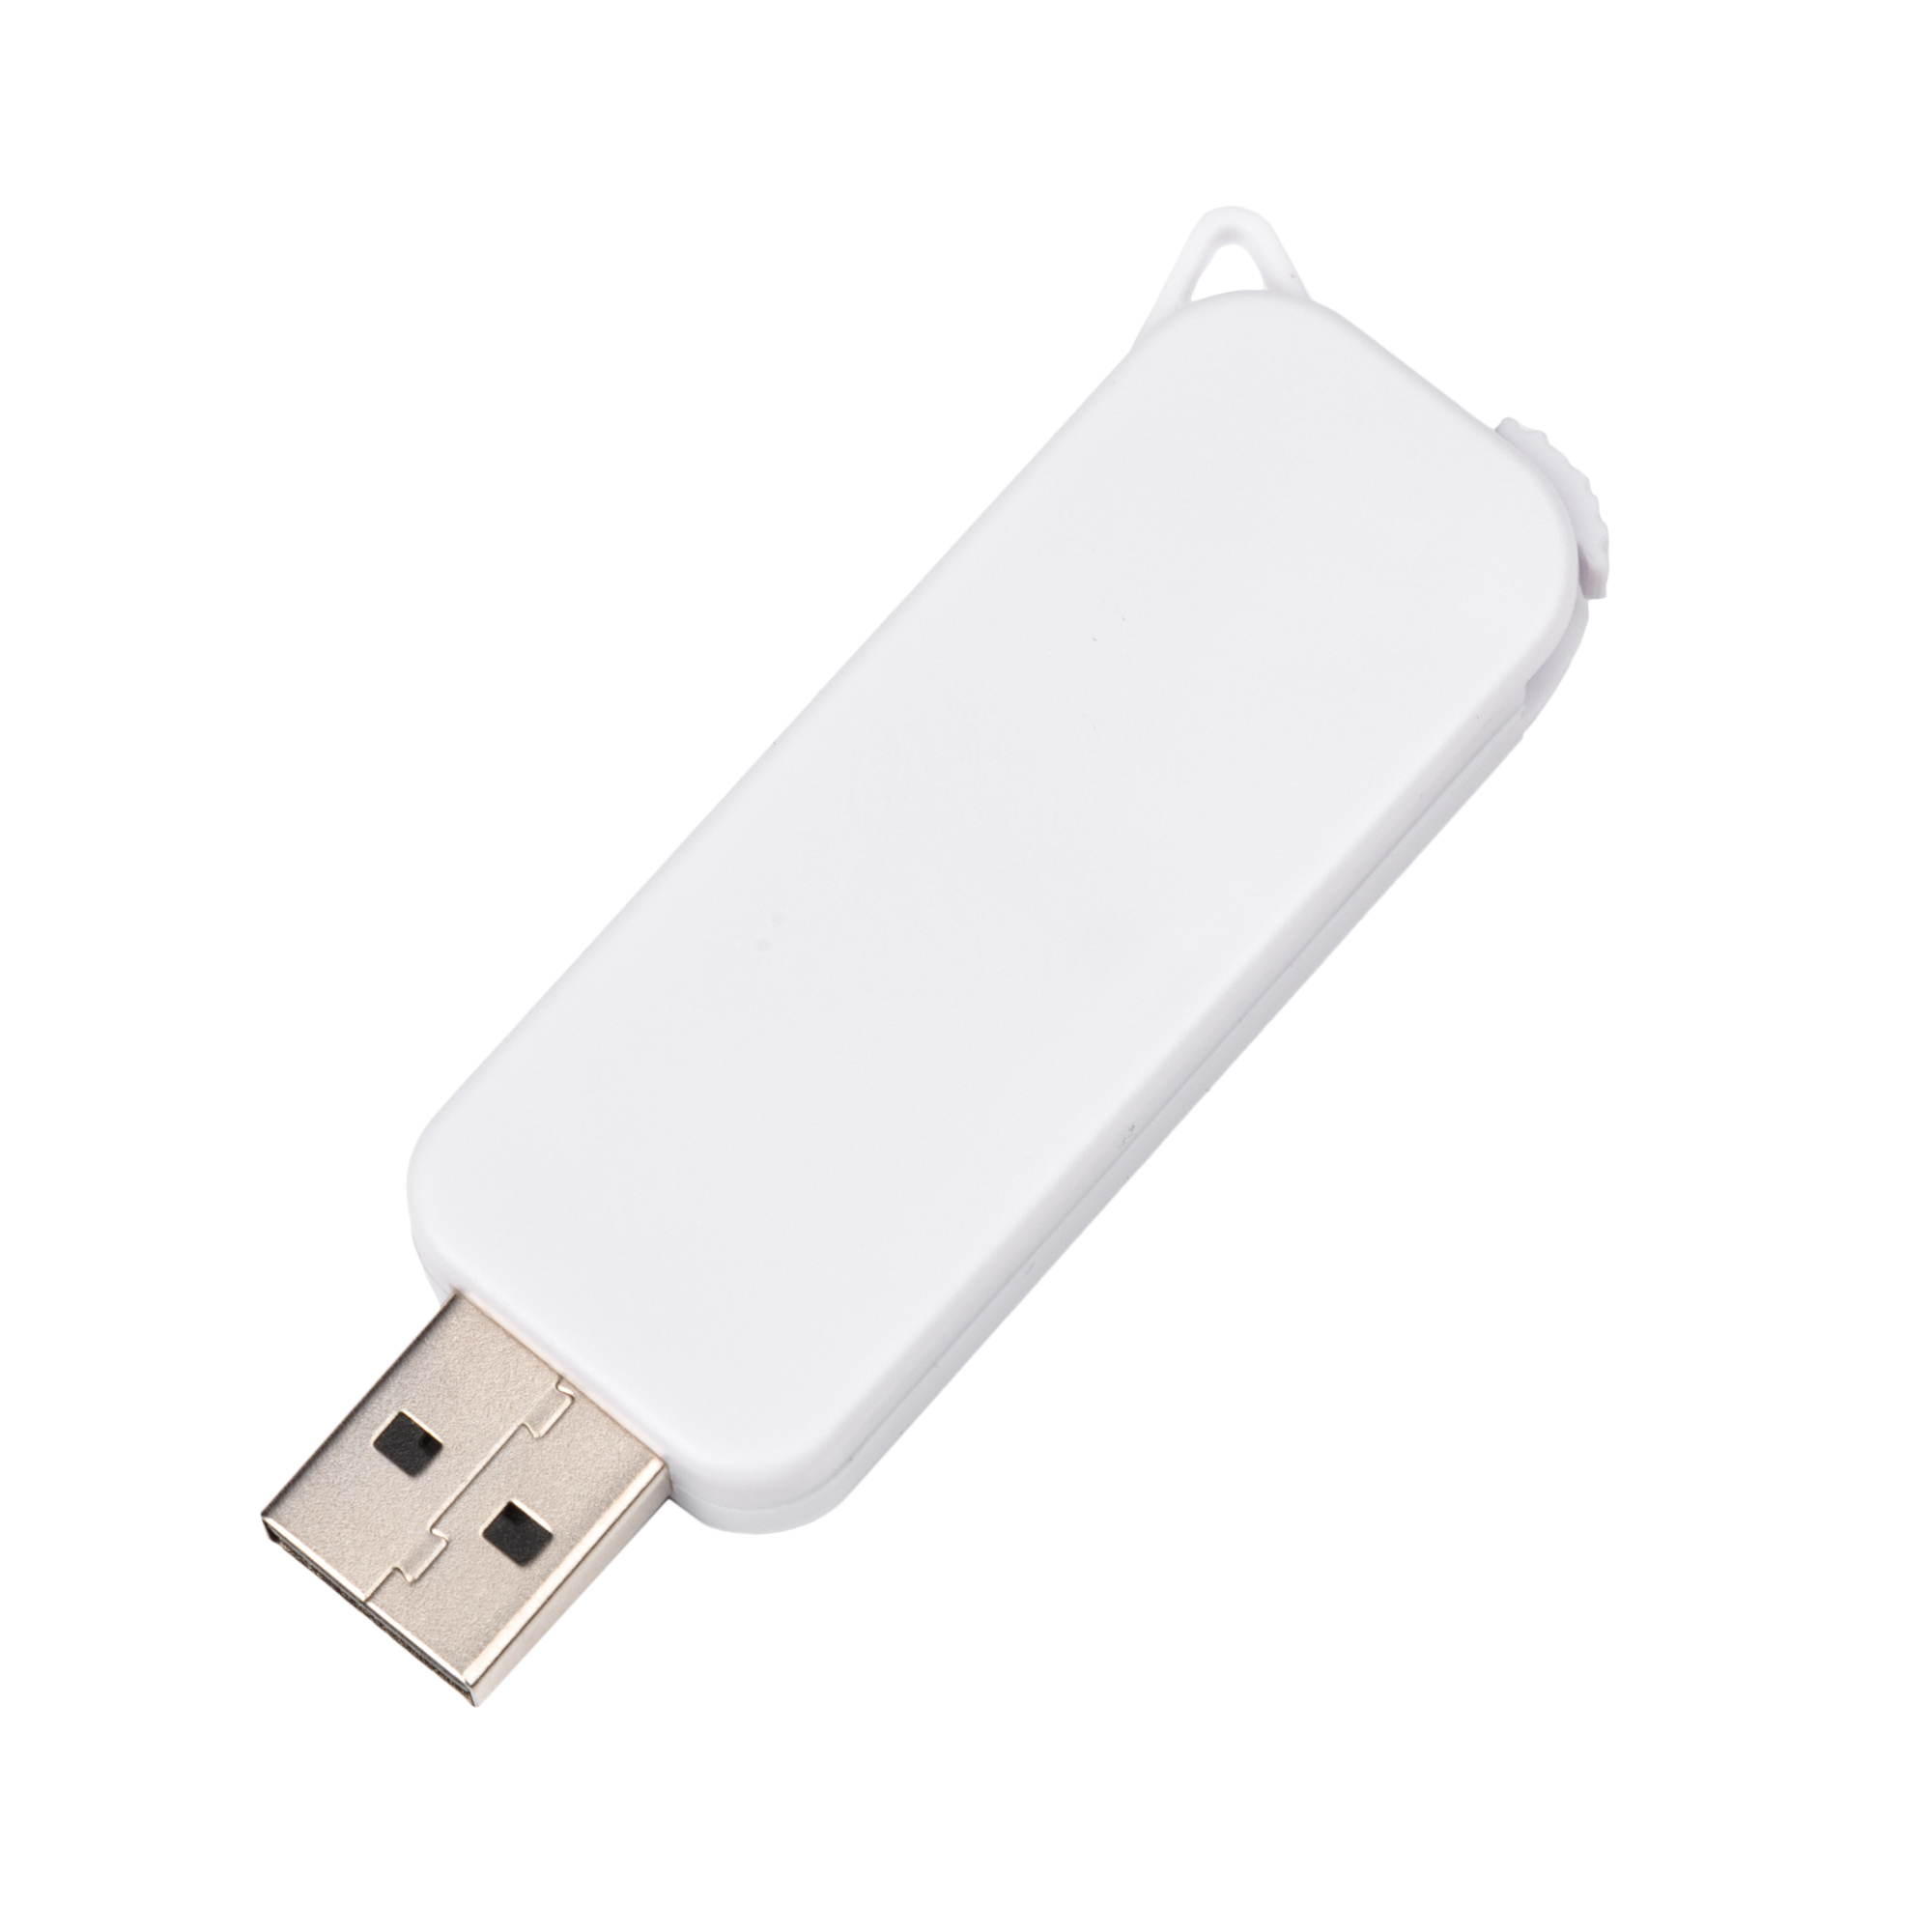 USB-флешка модель 123, (USB 3.0), объем памяти 128 GB, цвет белый